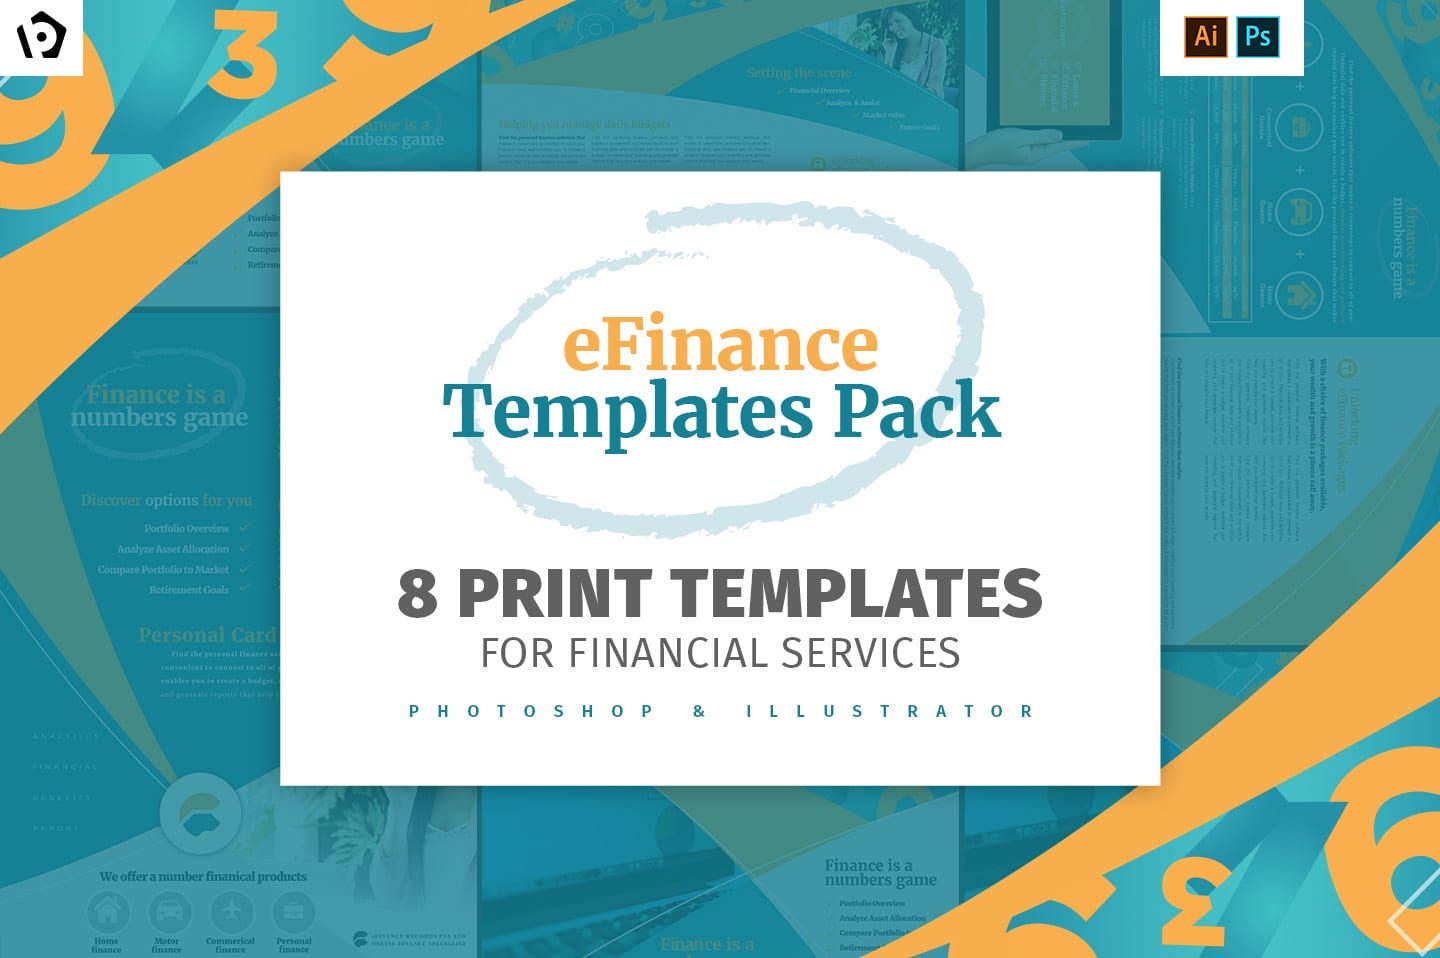 eFinance Templates Pack